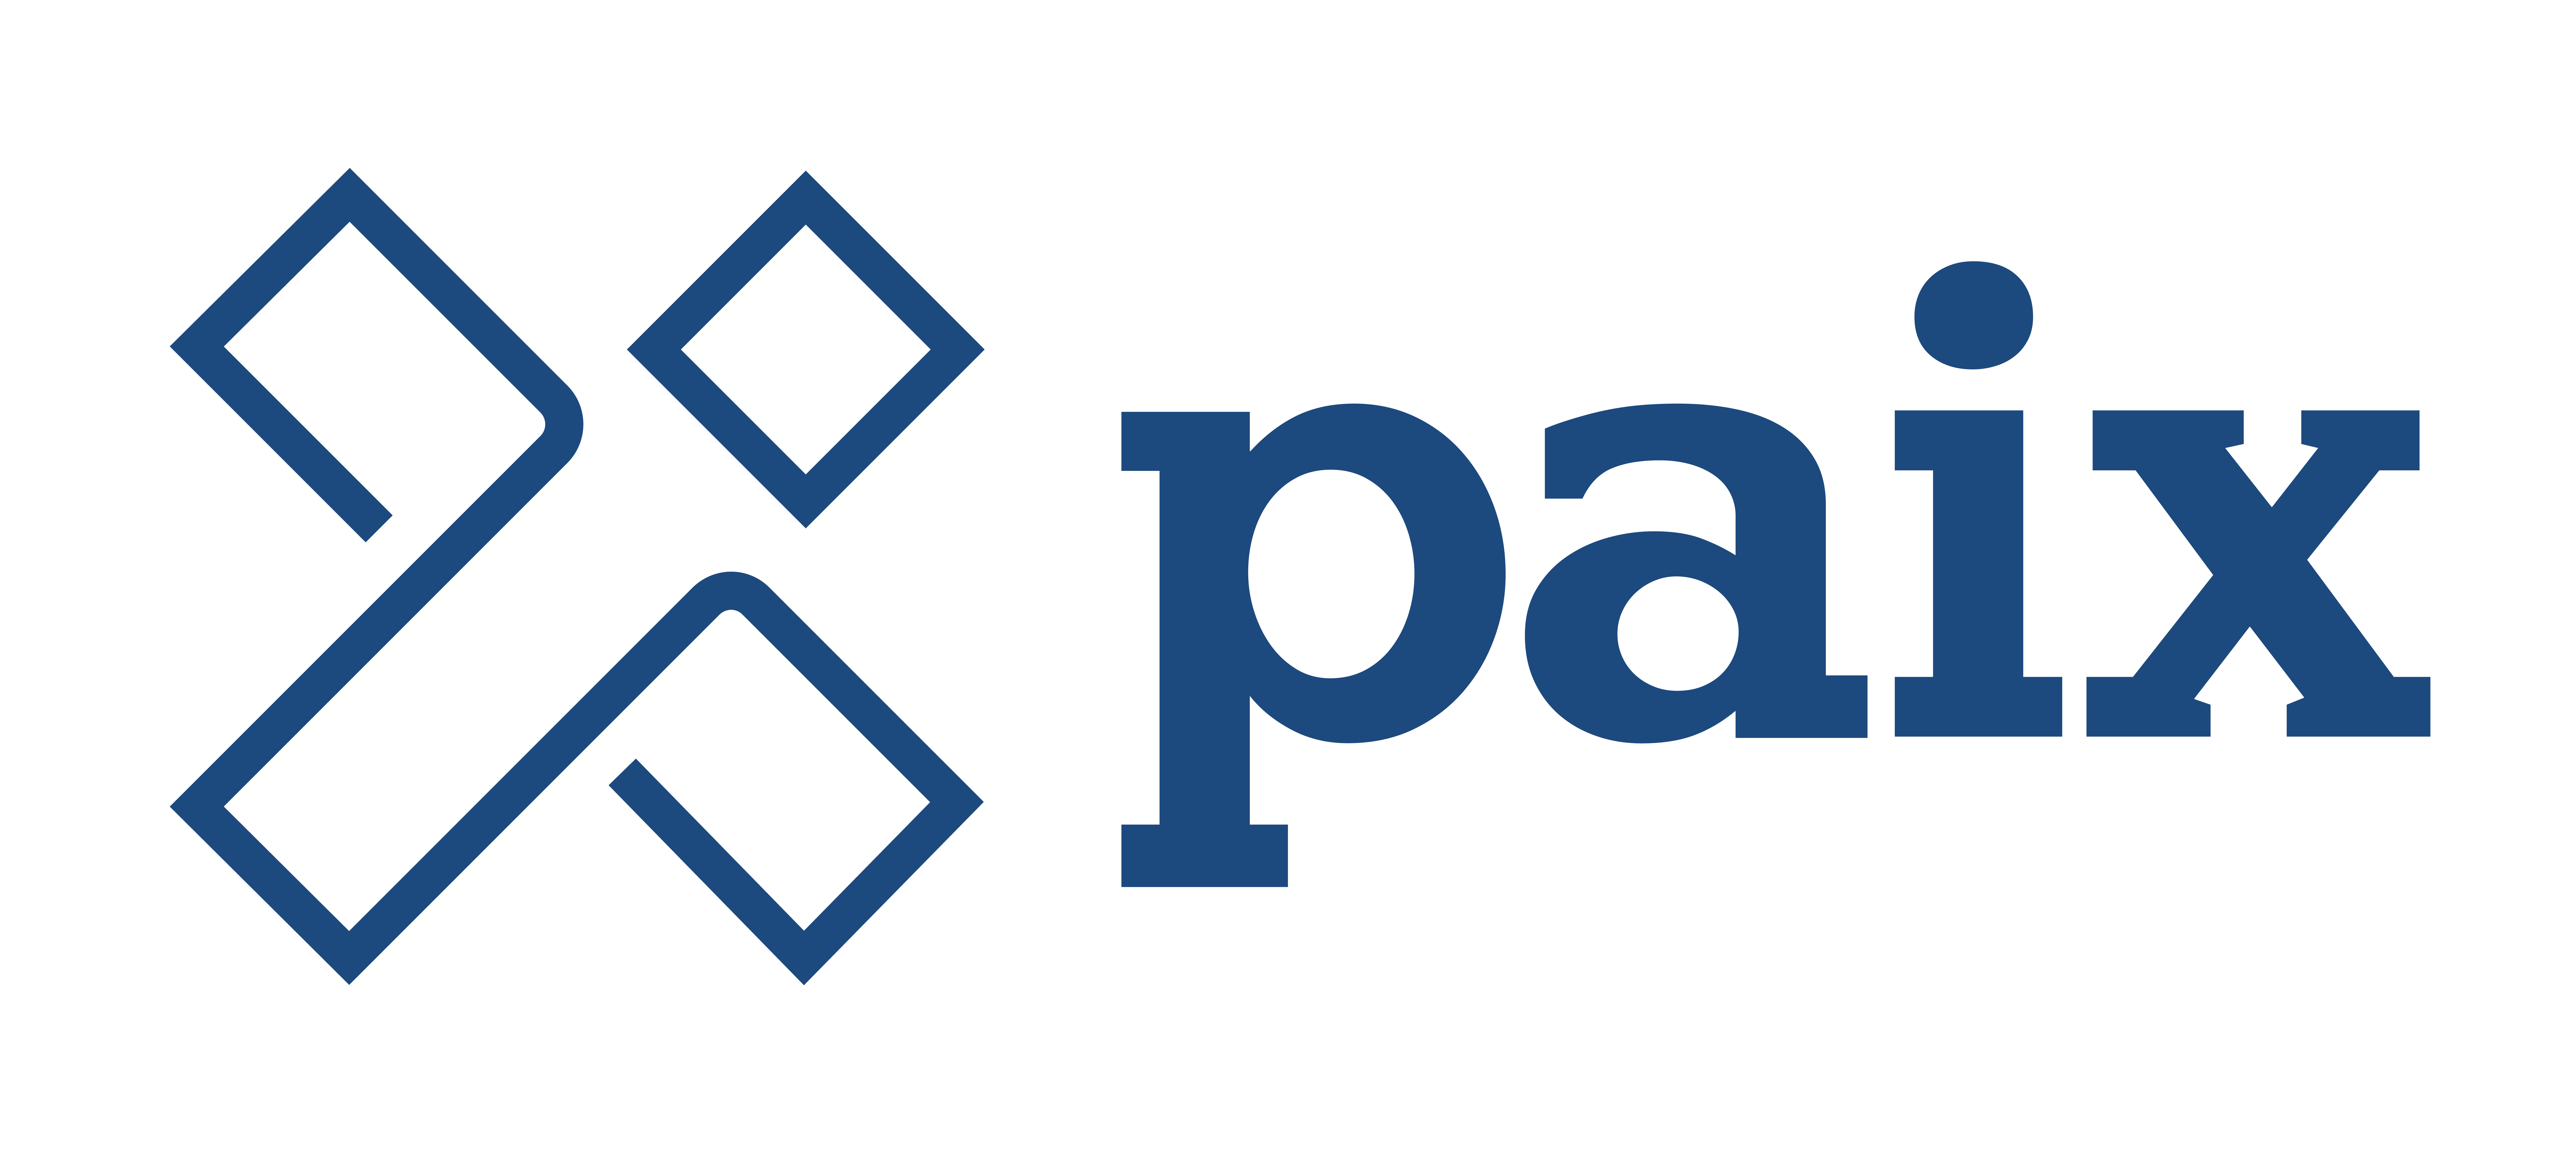 Paix Logo